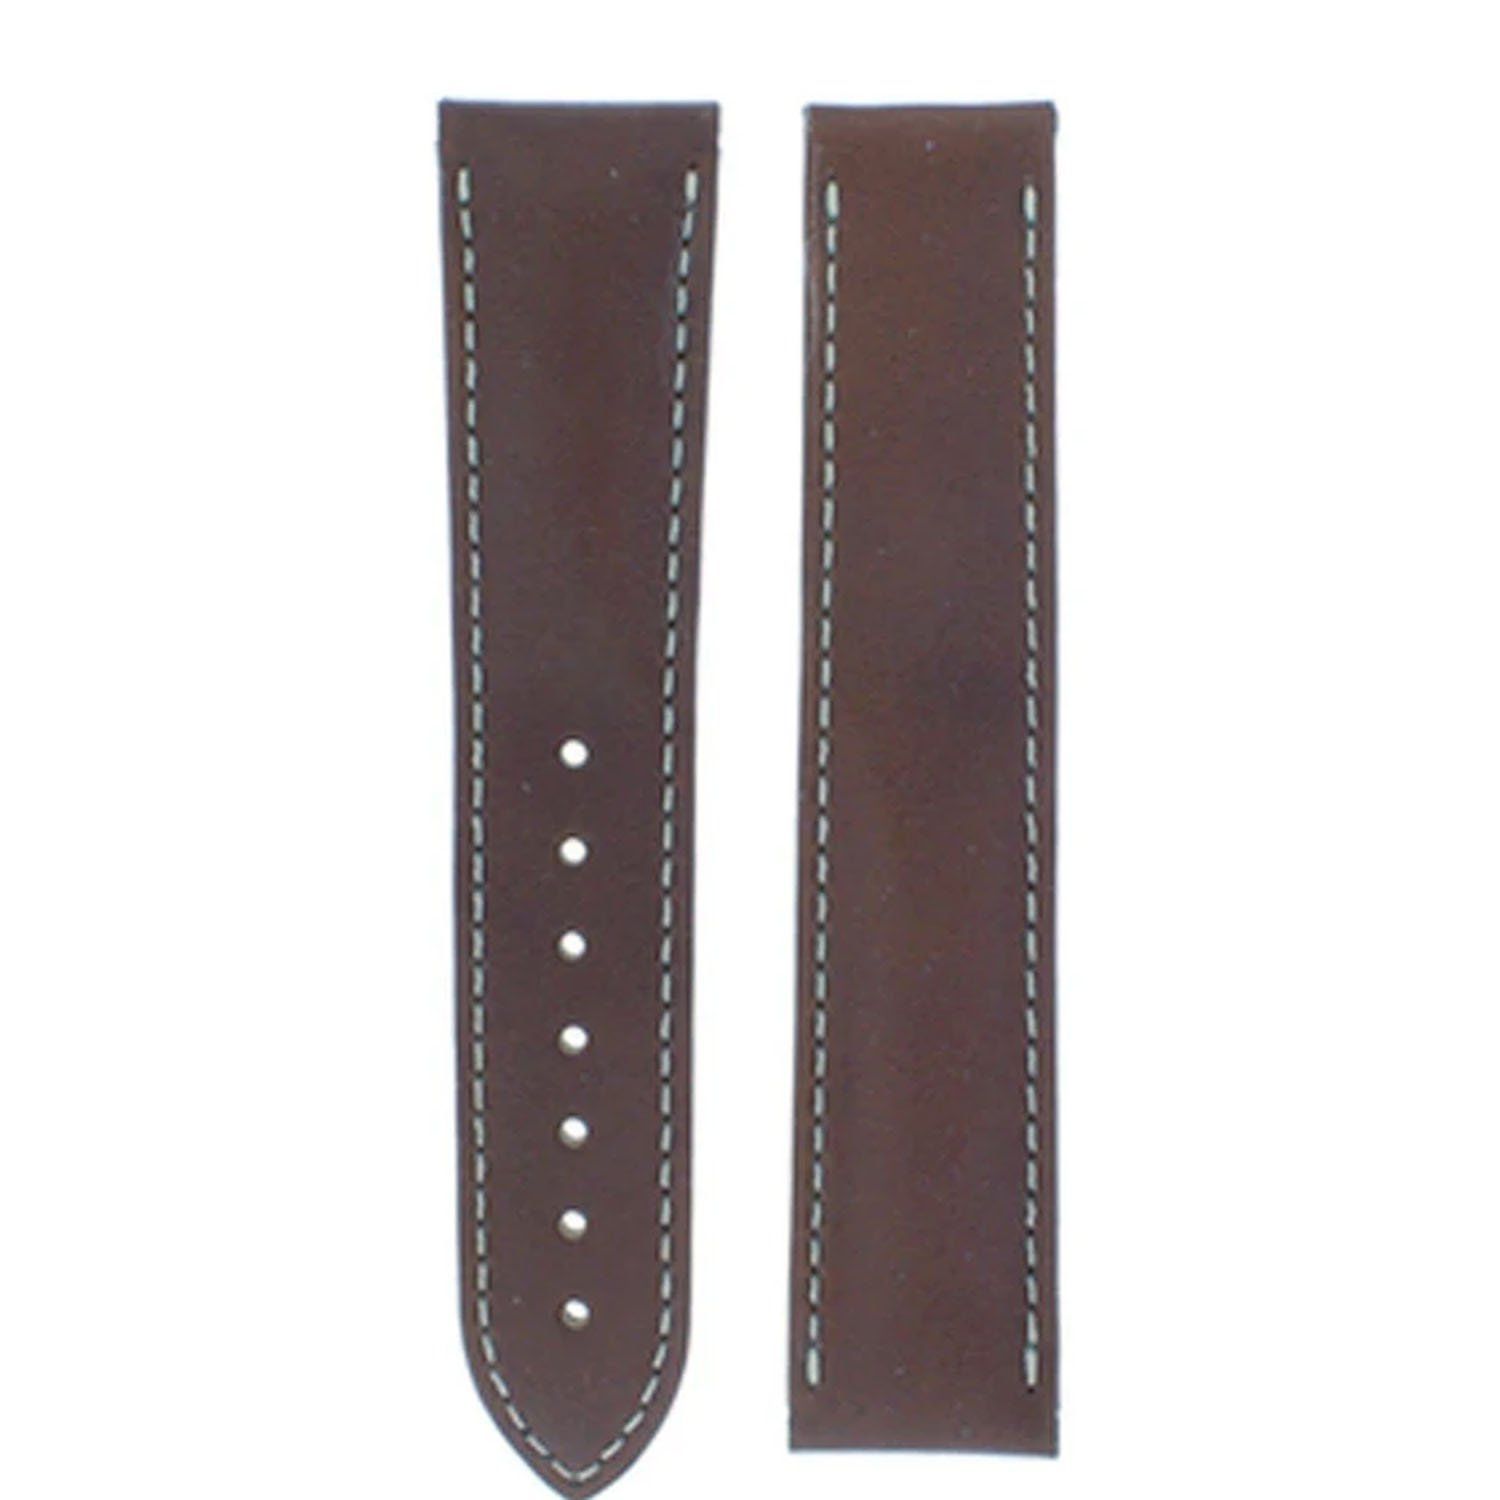 Omega 20mm Brown genuine leather Strap 032CUZ006728 image